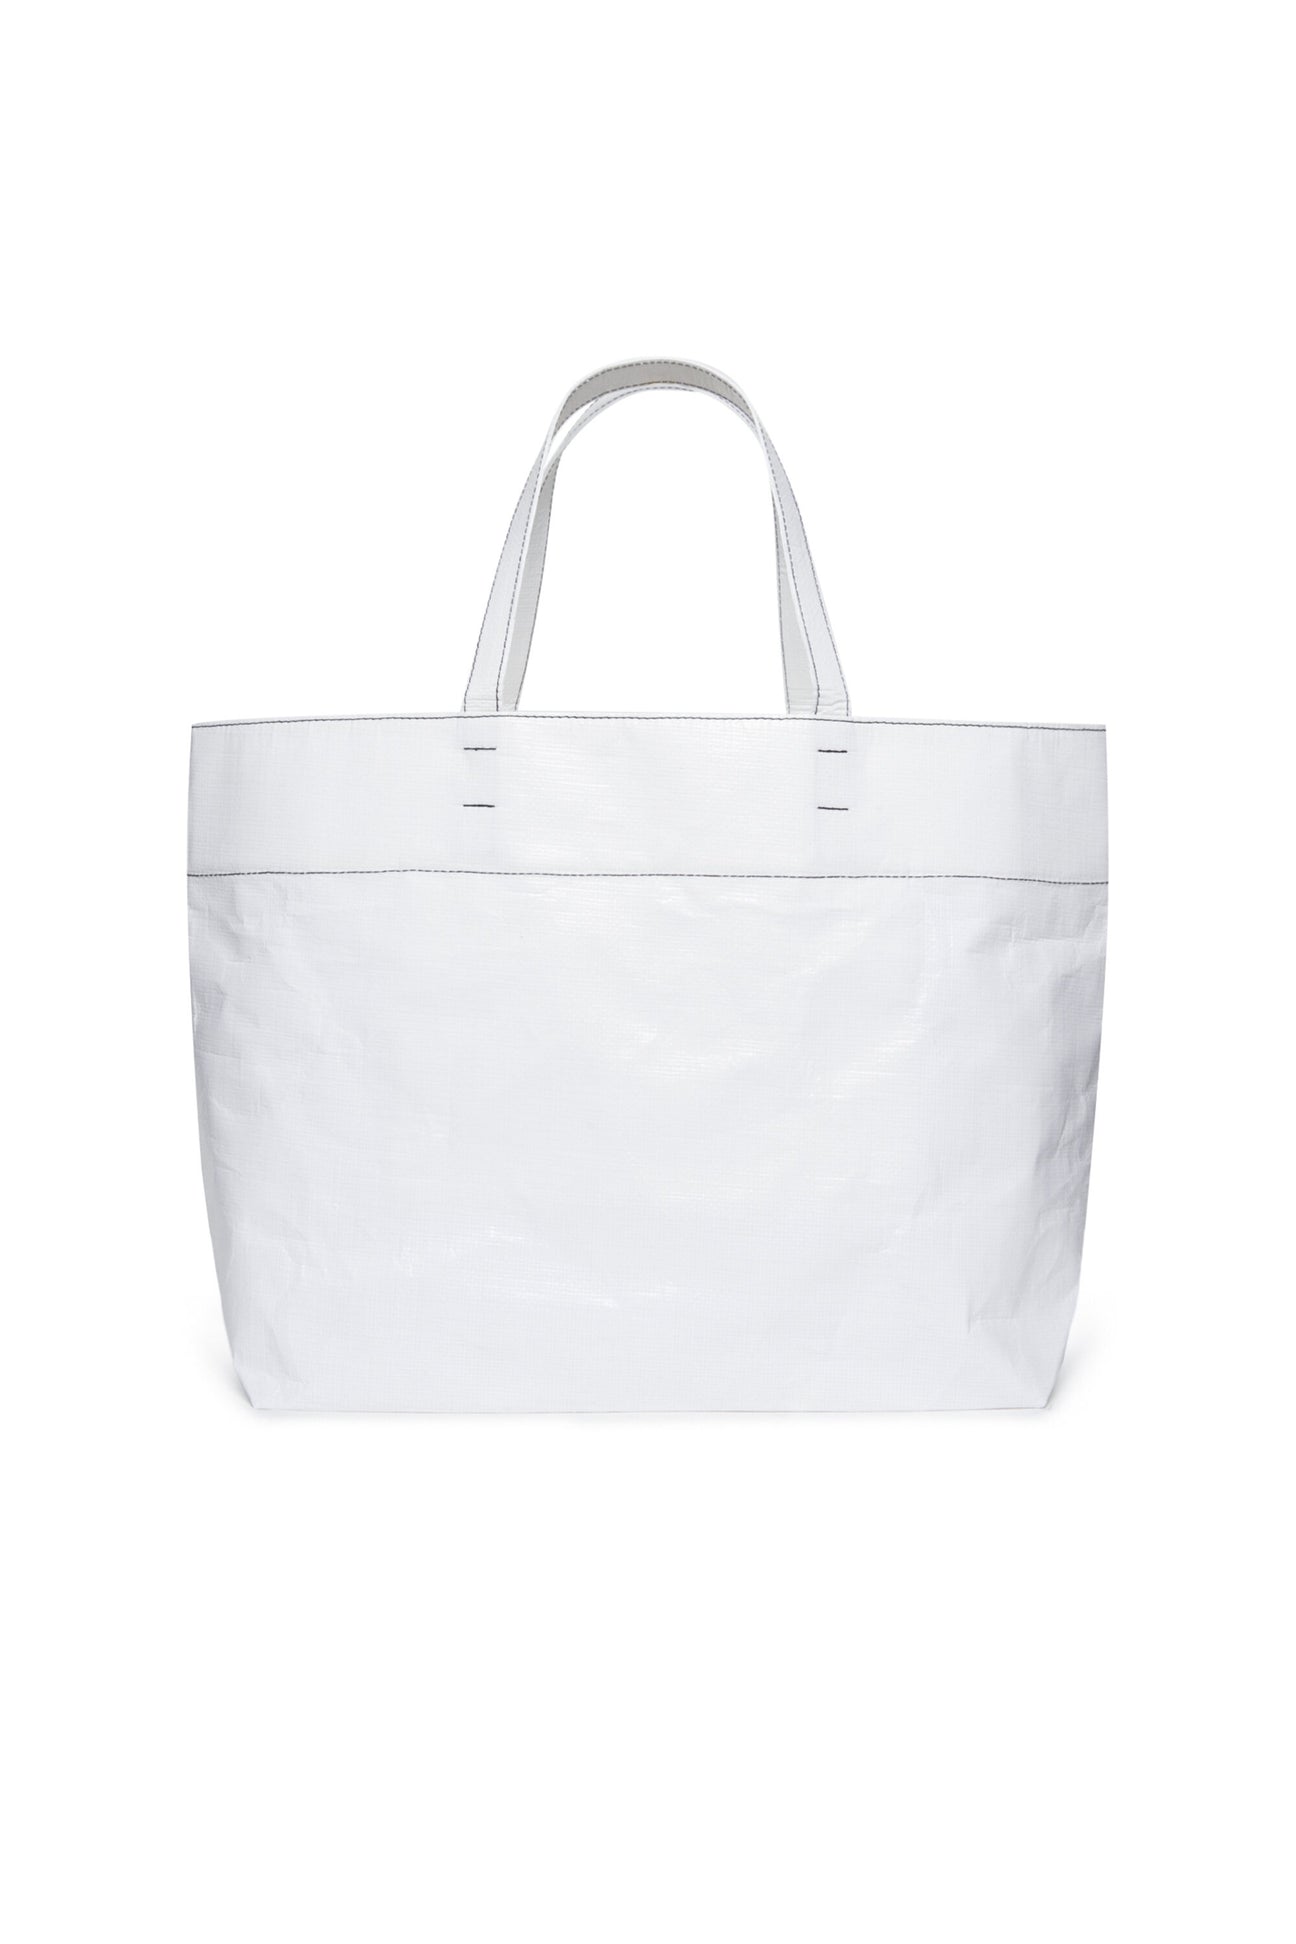 White shopper bag with institutional logo White shopper bag with institutional logo